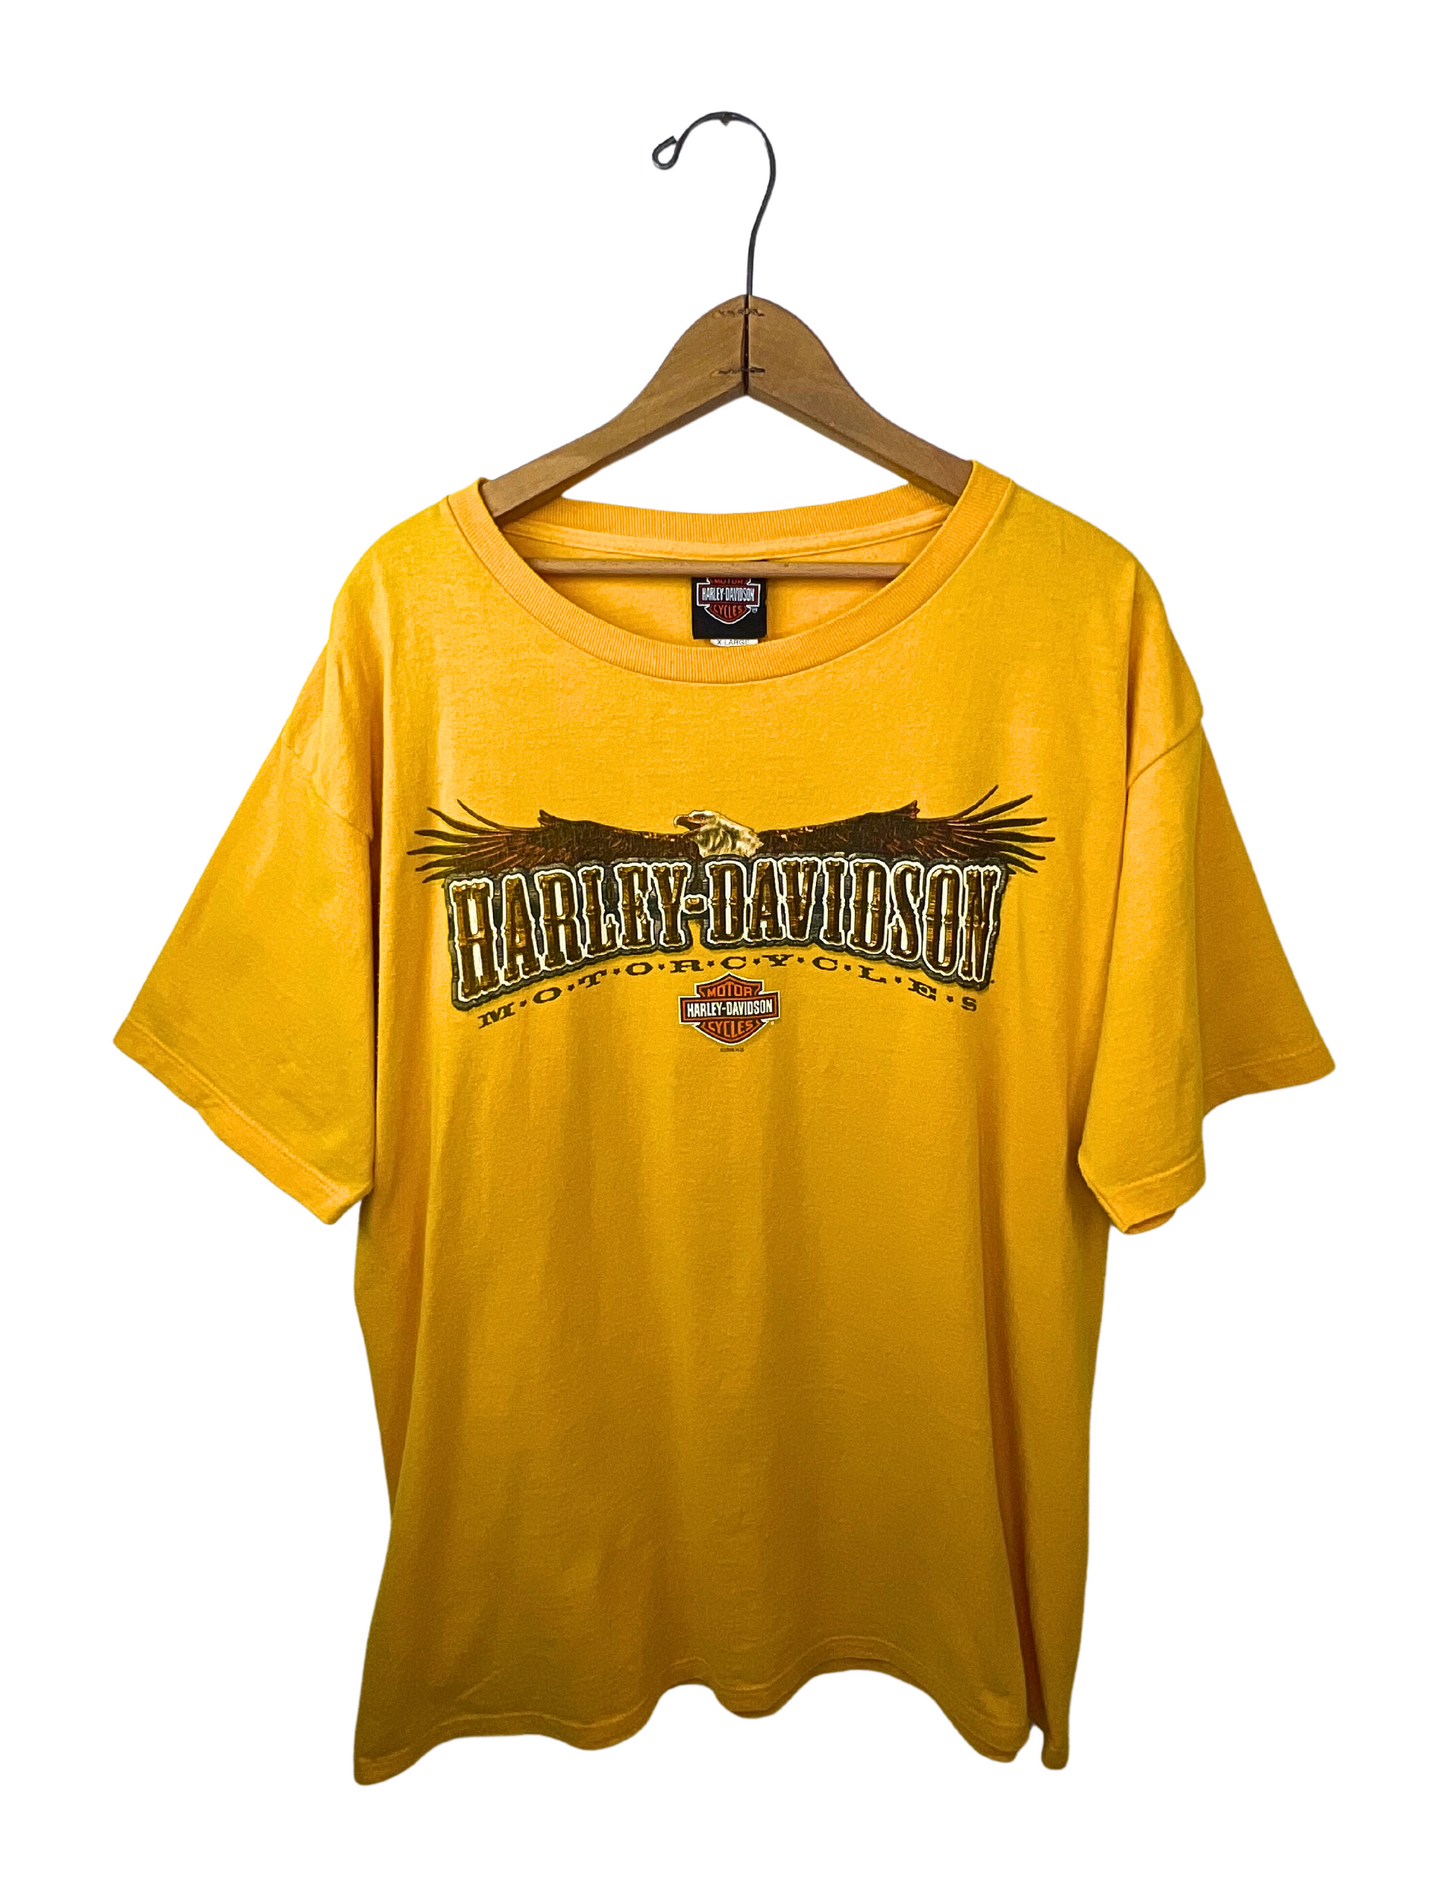 2005 Harley Davidson Kalispell, Montana Bald Eagle Biker T-shirt Size XL